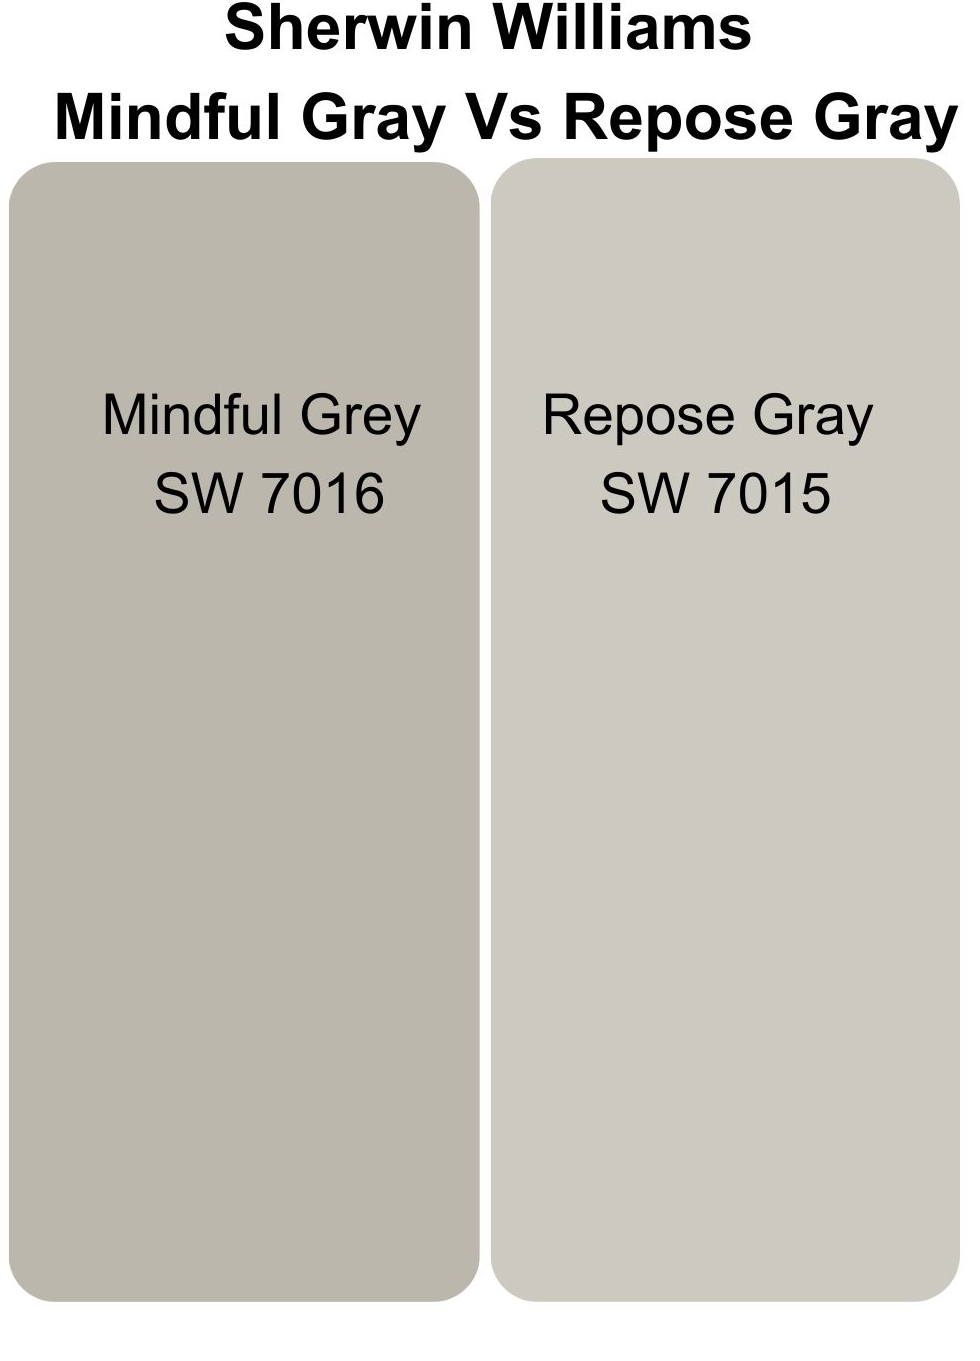 Mindful Gray vs. Repose Gray